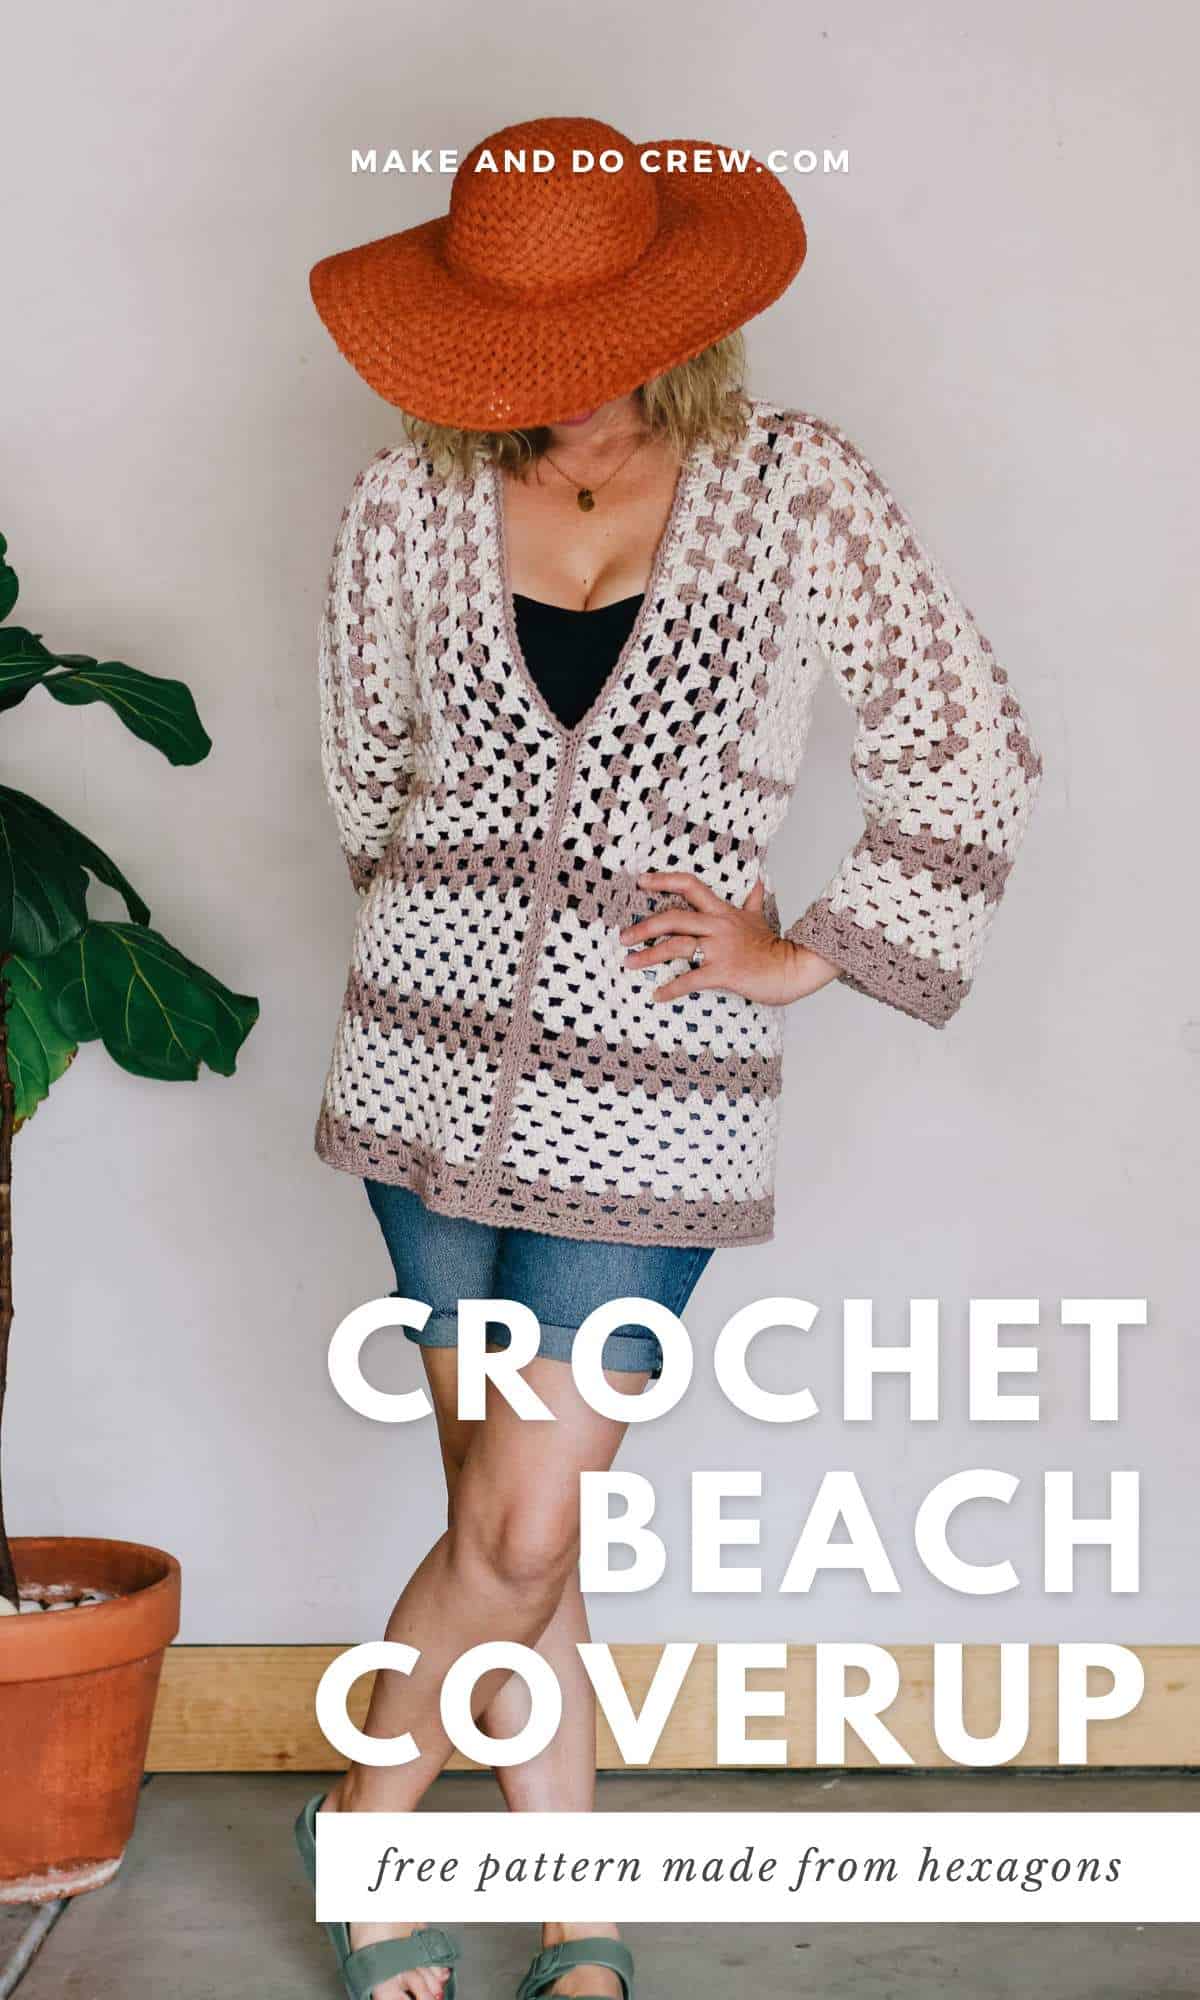 A woman wearing a crochet beach coverup pattern.